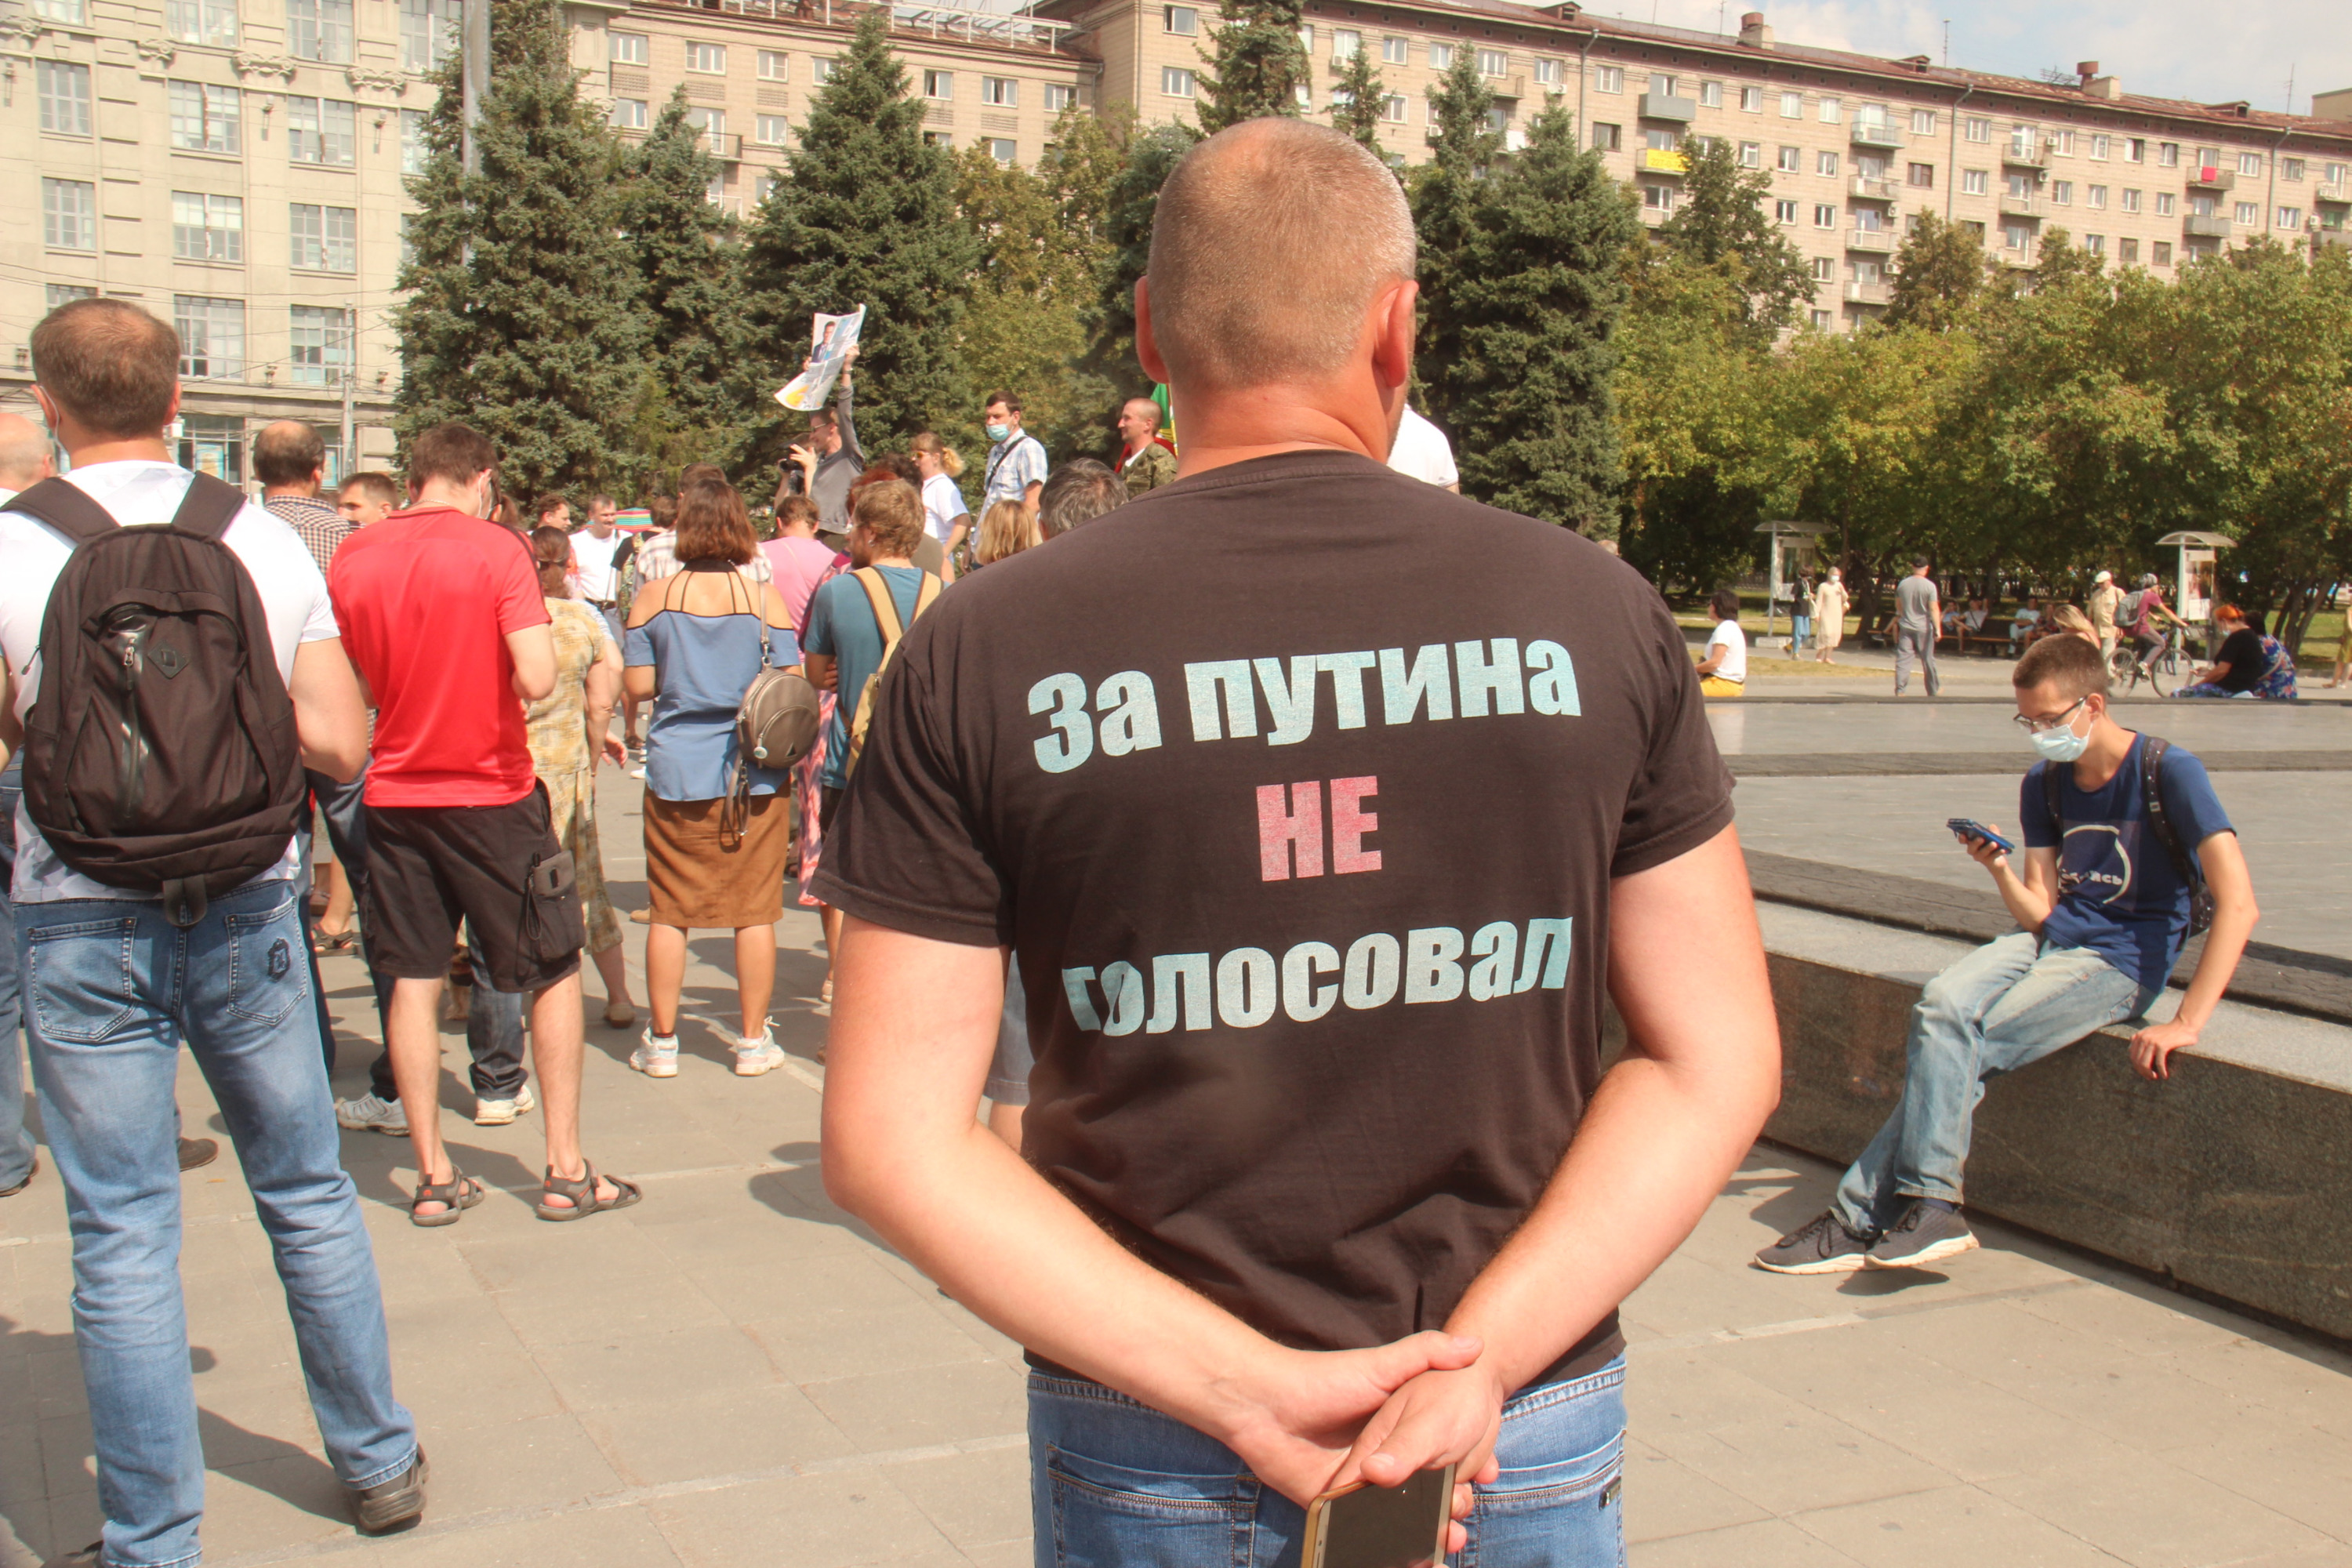 Против действующей власти. Против Путина. Футболка против Путина. Митинг. Протесты против Путина.